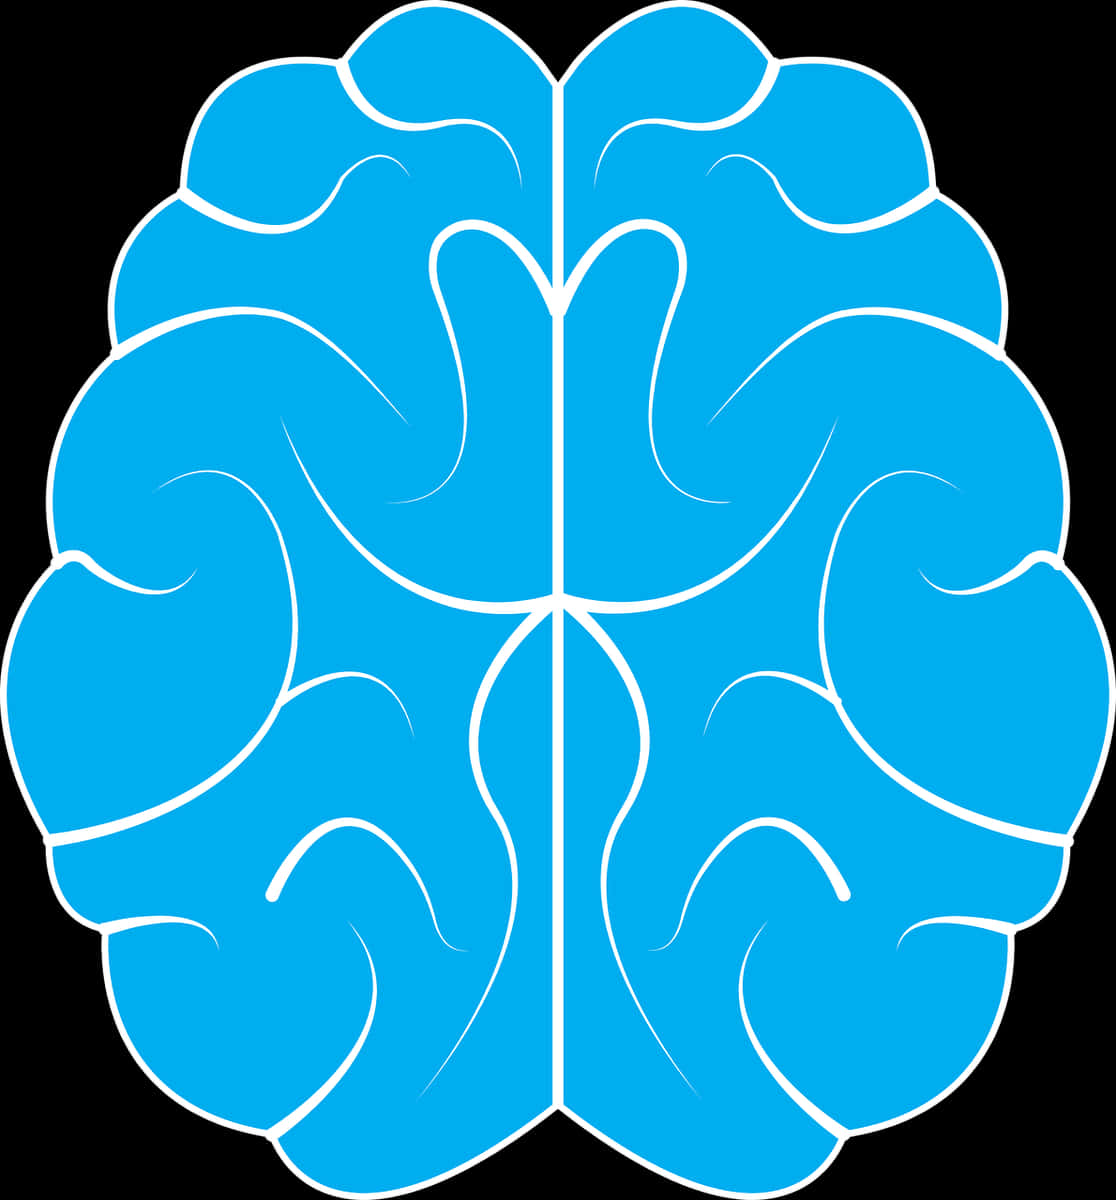 Stylized Blue Brain Illustration PNG